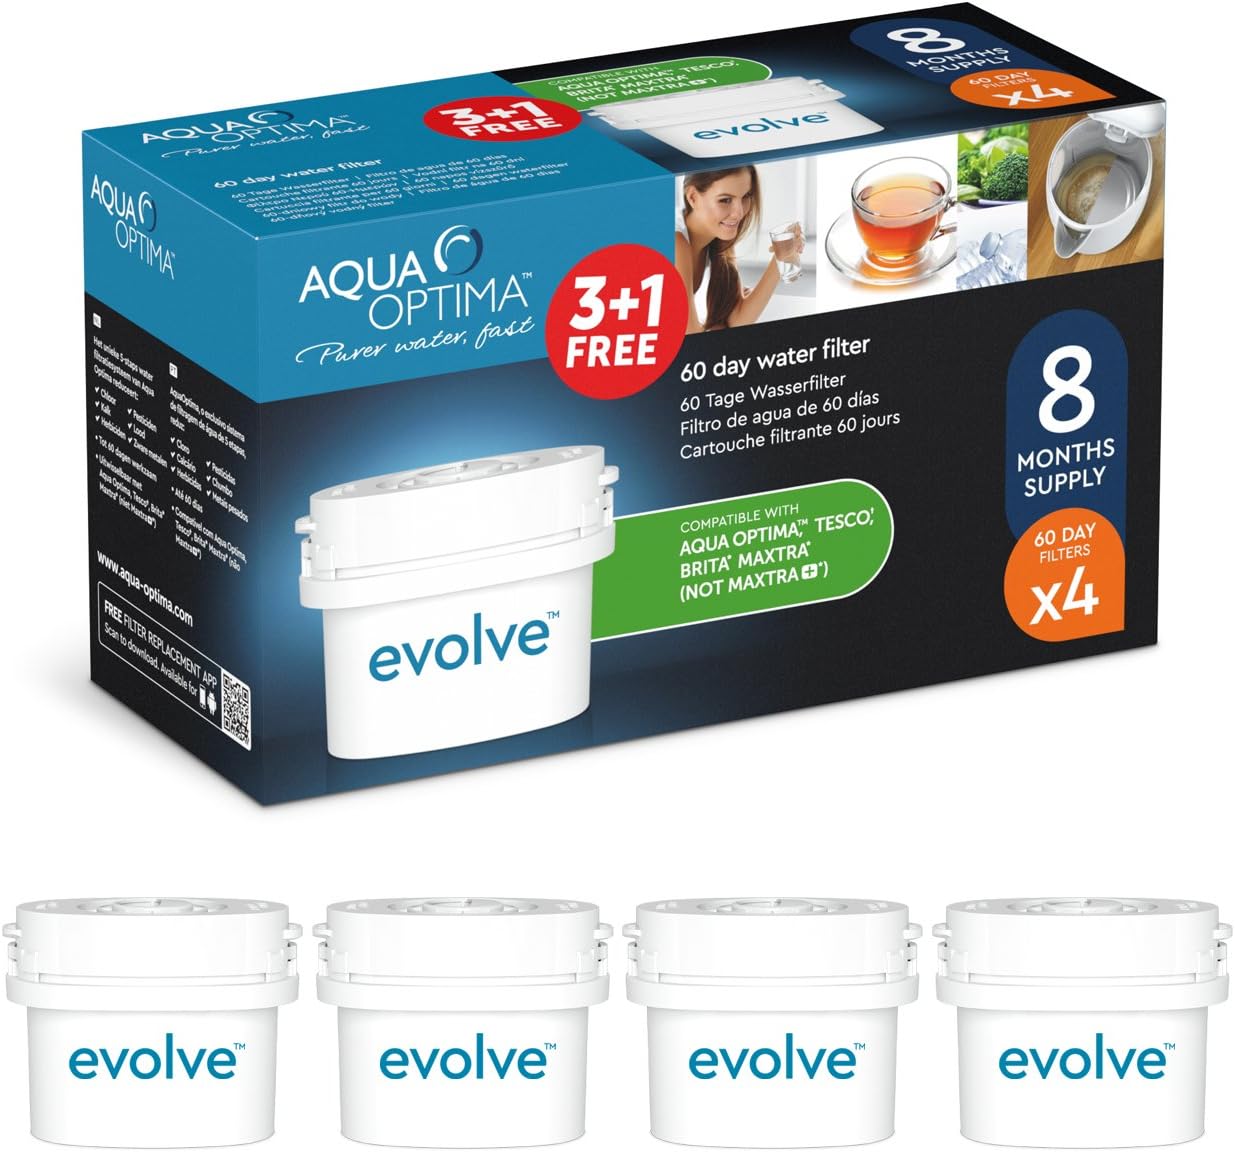 Aqua Optima Evolve 8 month pack, 4 x 60 day water filters - Fit BRITA* Maxtra* (not Maxtra+*) - EVD415